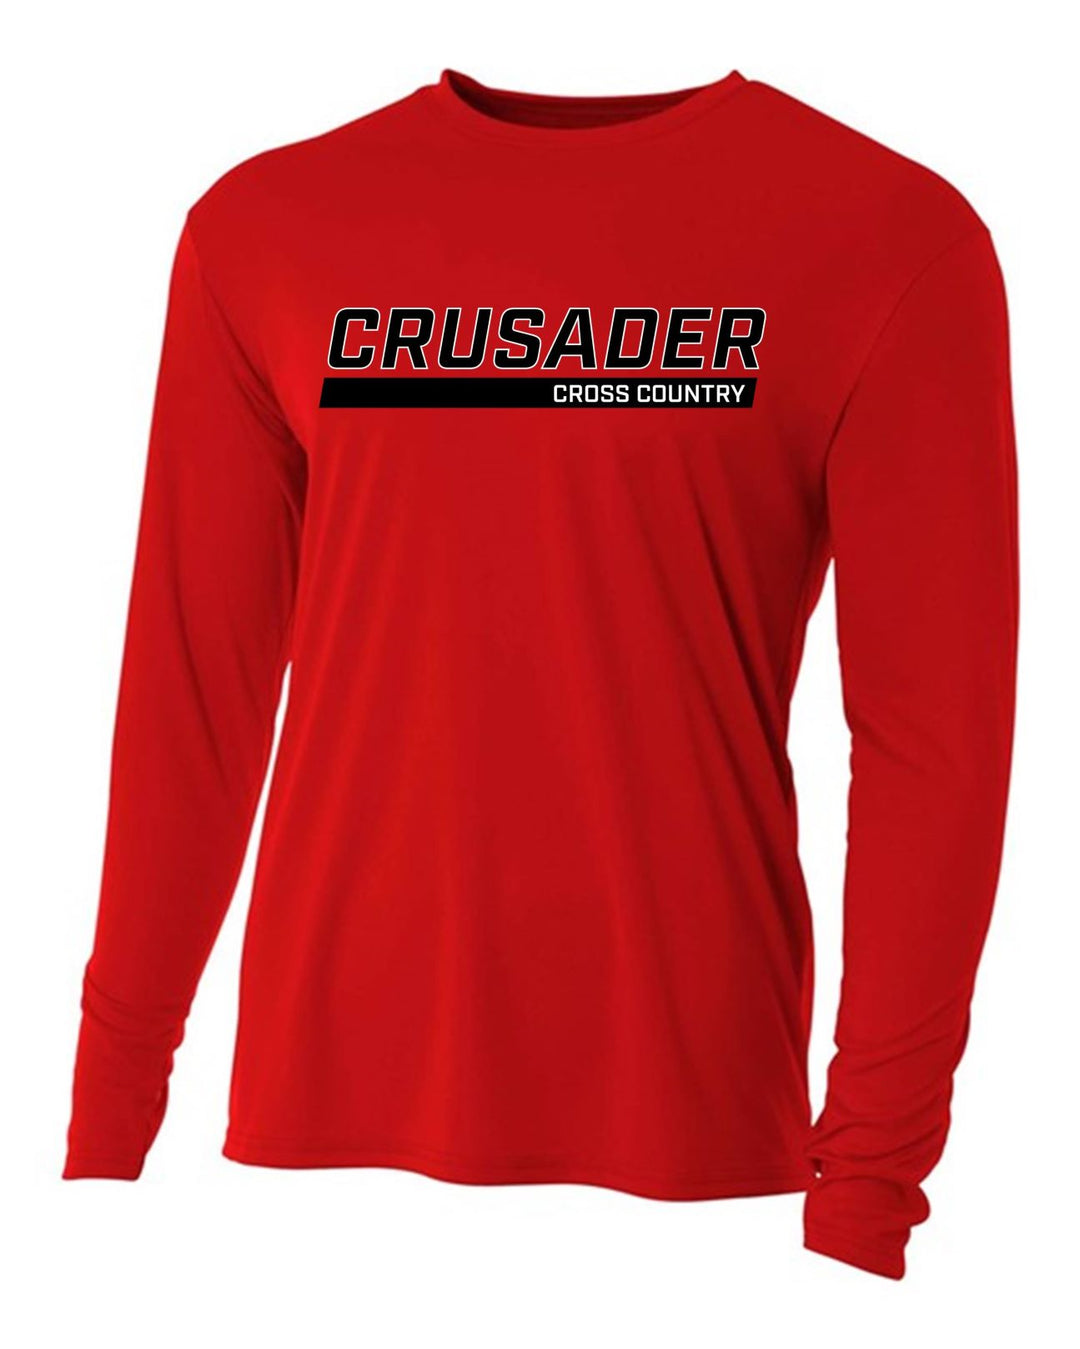 WCU Cross Country Men's Long-Sleeve Performance Shirt WCU Cross Country Red CRUSADER - Third Coast Soccer